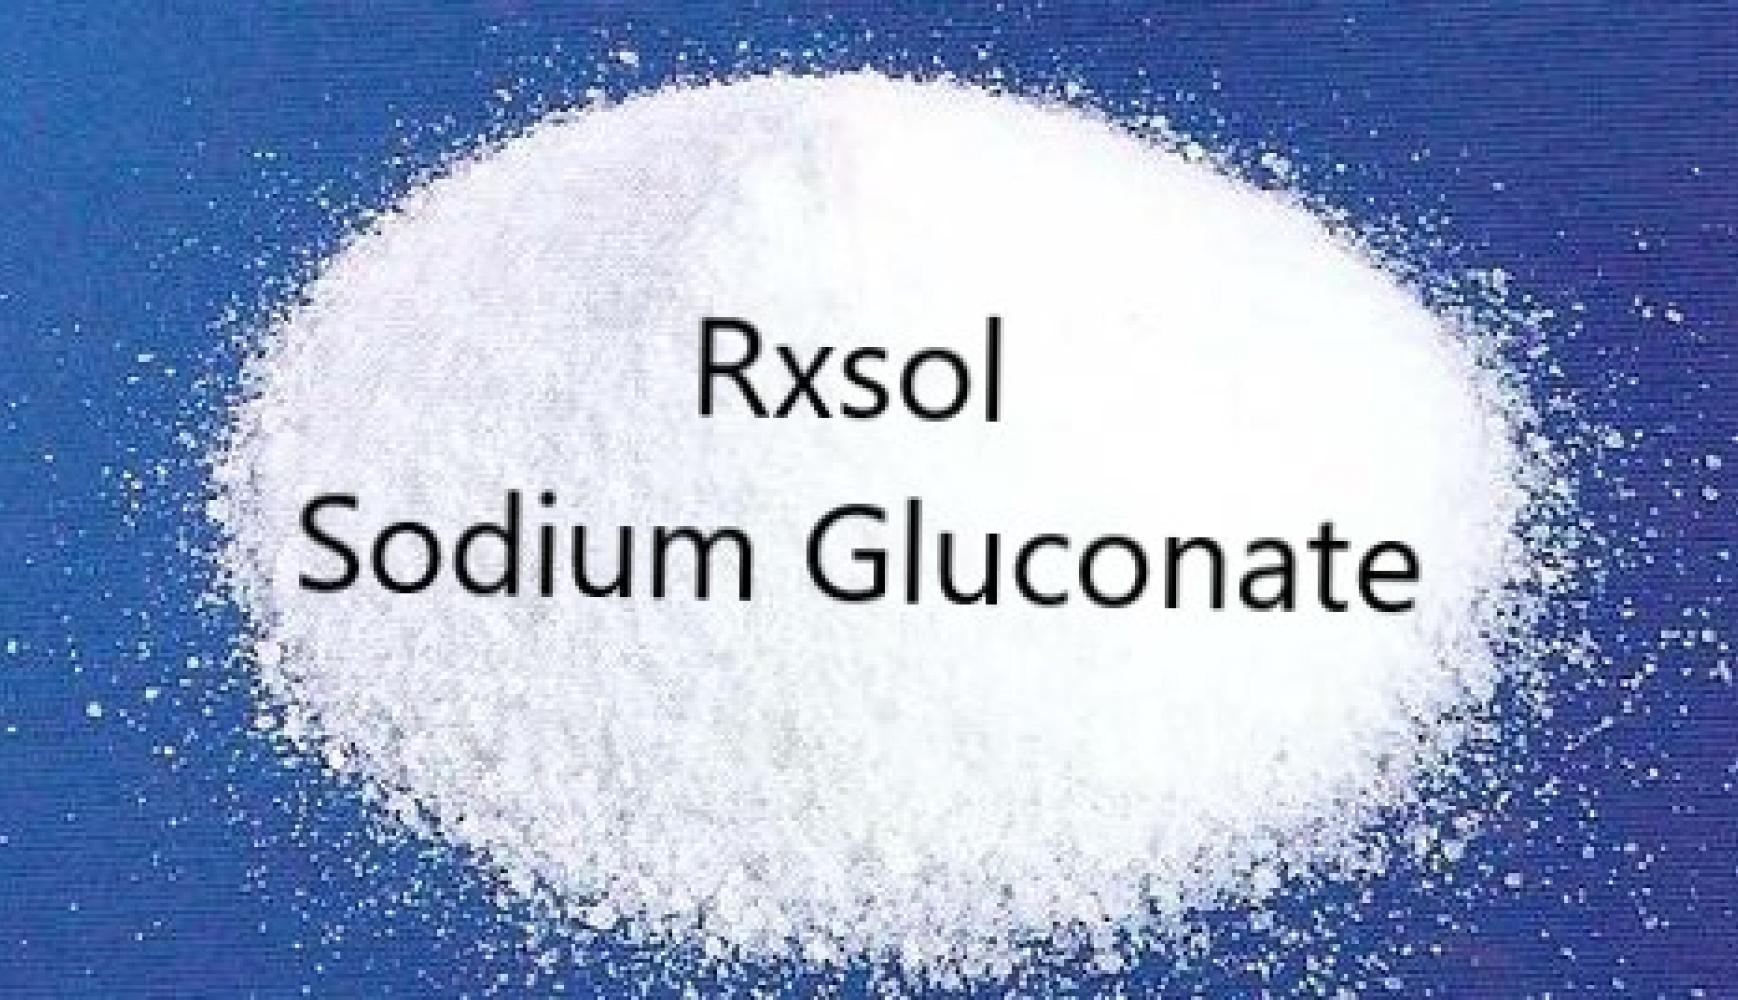 Dubichems rxsol sodium gluconate